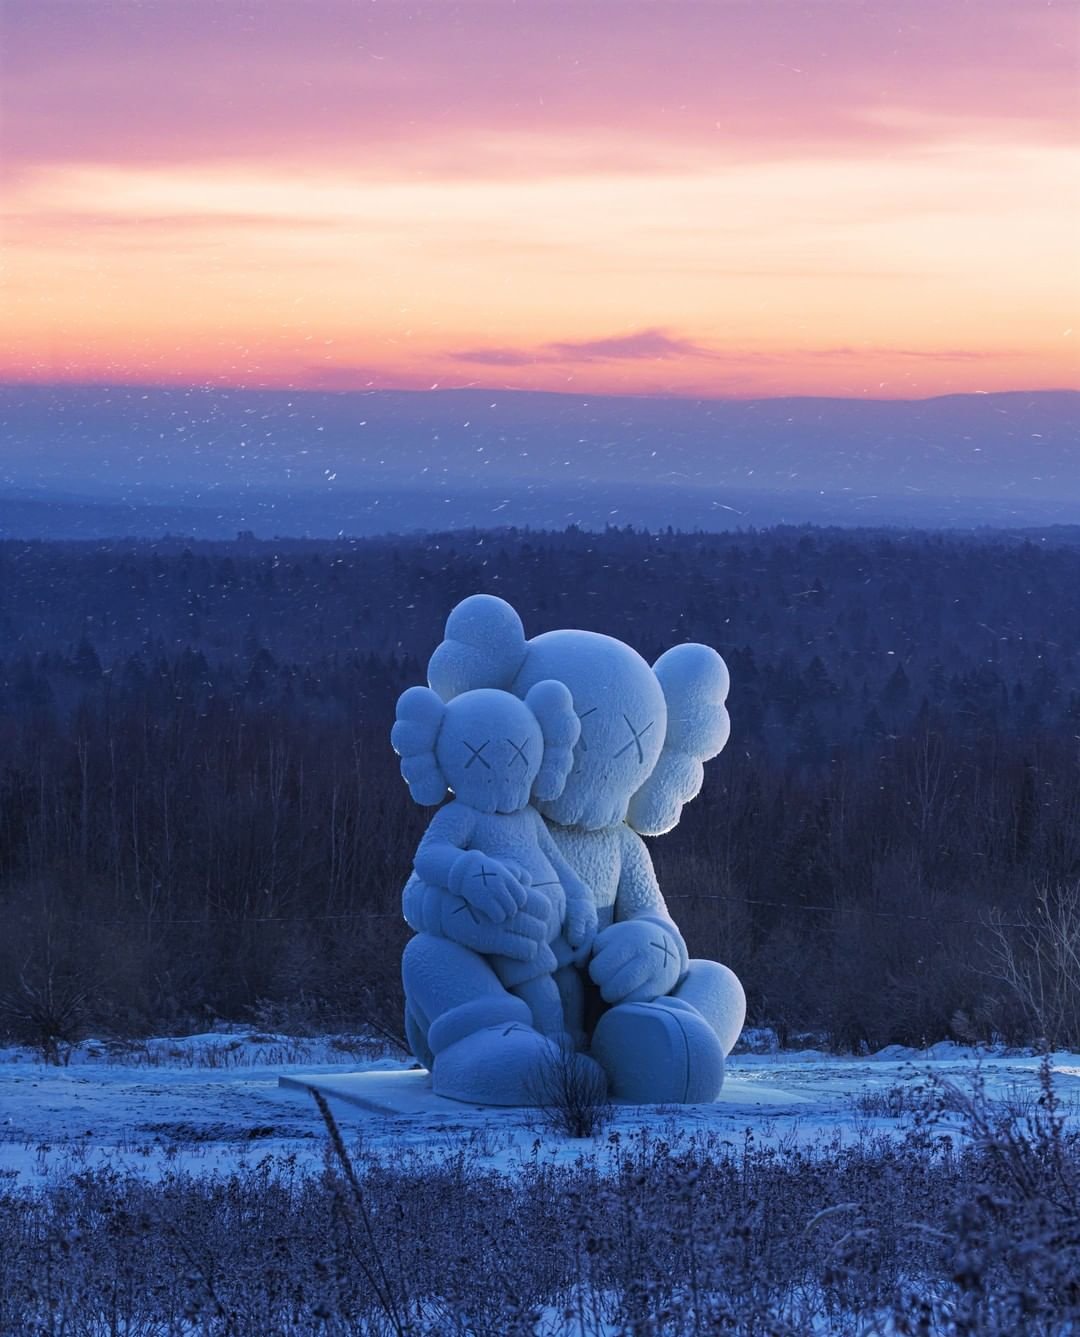 第 8 站《KAWS：HOLIDAY》中國吉林省長白山 COMPANION 巨型雪雕